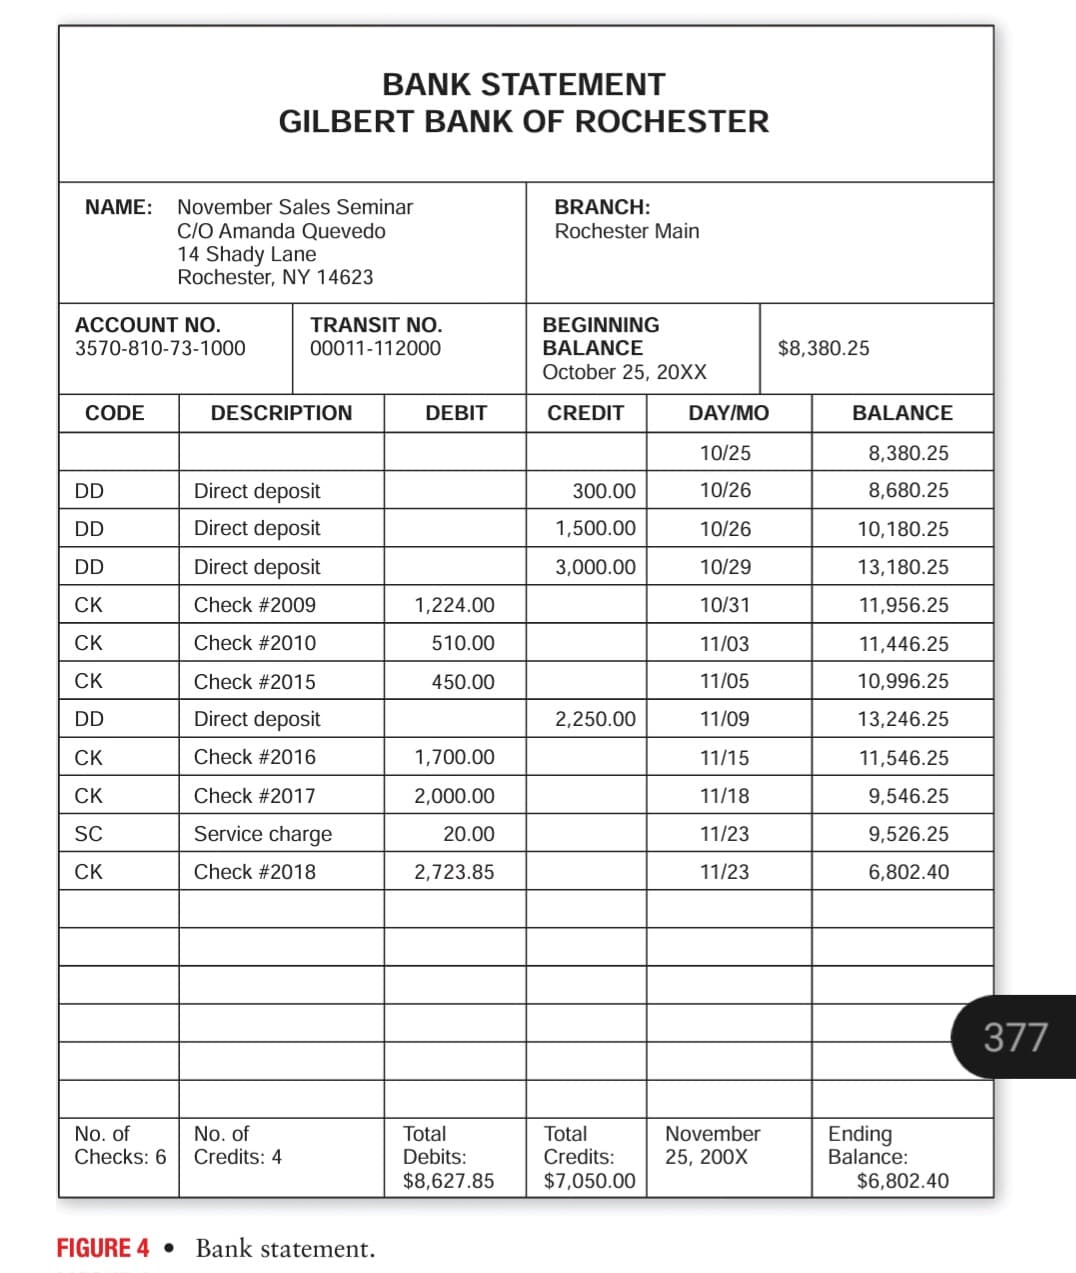 BANK STATEMENT
GILBERT BANK OF ROCHESTER
NAME: November Sales Seminar
C/O Amanda Quevedo
14 Shady Lane
Rochester, NY 14623
ACCOUNT NO.
TRANSIT NO.
3570-810-73-1000
00011-112000
BRANCH:
Rochester Main
BEGINNING
BALANCE
$8,380.25
October 25, 20XX
CODE
DESCRIPTION
DEBIT
CREDIT
DAY/MO
BALANCE
10/25
8,380.25
DD
Direct deposit
300.00
10/26
8,680.25
DD
Direct deposit
1,500.00
10/26
10,180.25
DD
Direct deposit
3,000.00
10/29
13,180.25
CK
Check #2009
1,224.00
10/31
11,956.25
CK
Check #2010
510.00
11/03
11,446.25
CK
Check #2015
450.00
11/05
10,996.25
DD
Direct deposit
2,250.00
11/09
13,246.25
CK
Check #2016
1,700.00
11/15
11,546.25
CK
Check #2017
2,000.00
11/18
9,546.25
SC
Service charge
20.00
11/23
9,526.25
CK
Check #2018
2,723.85
11/23
6,802.40
No. of
Checks: 6
No. of
Credits: 4
Total
Debits:
$8,627.85
Total
Credits:
$7,050.00
FIGURE 4 •
Bank statement.
November
25, 200X
Ending
Balance:
$6,802.40
377